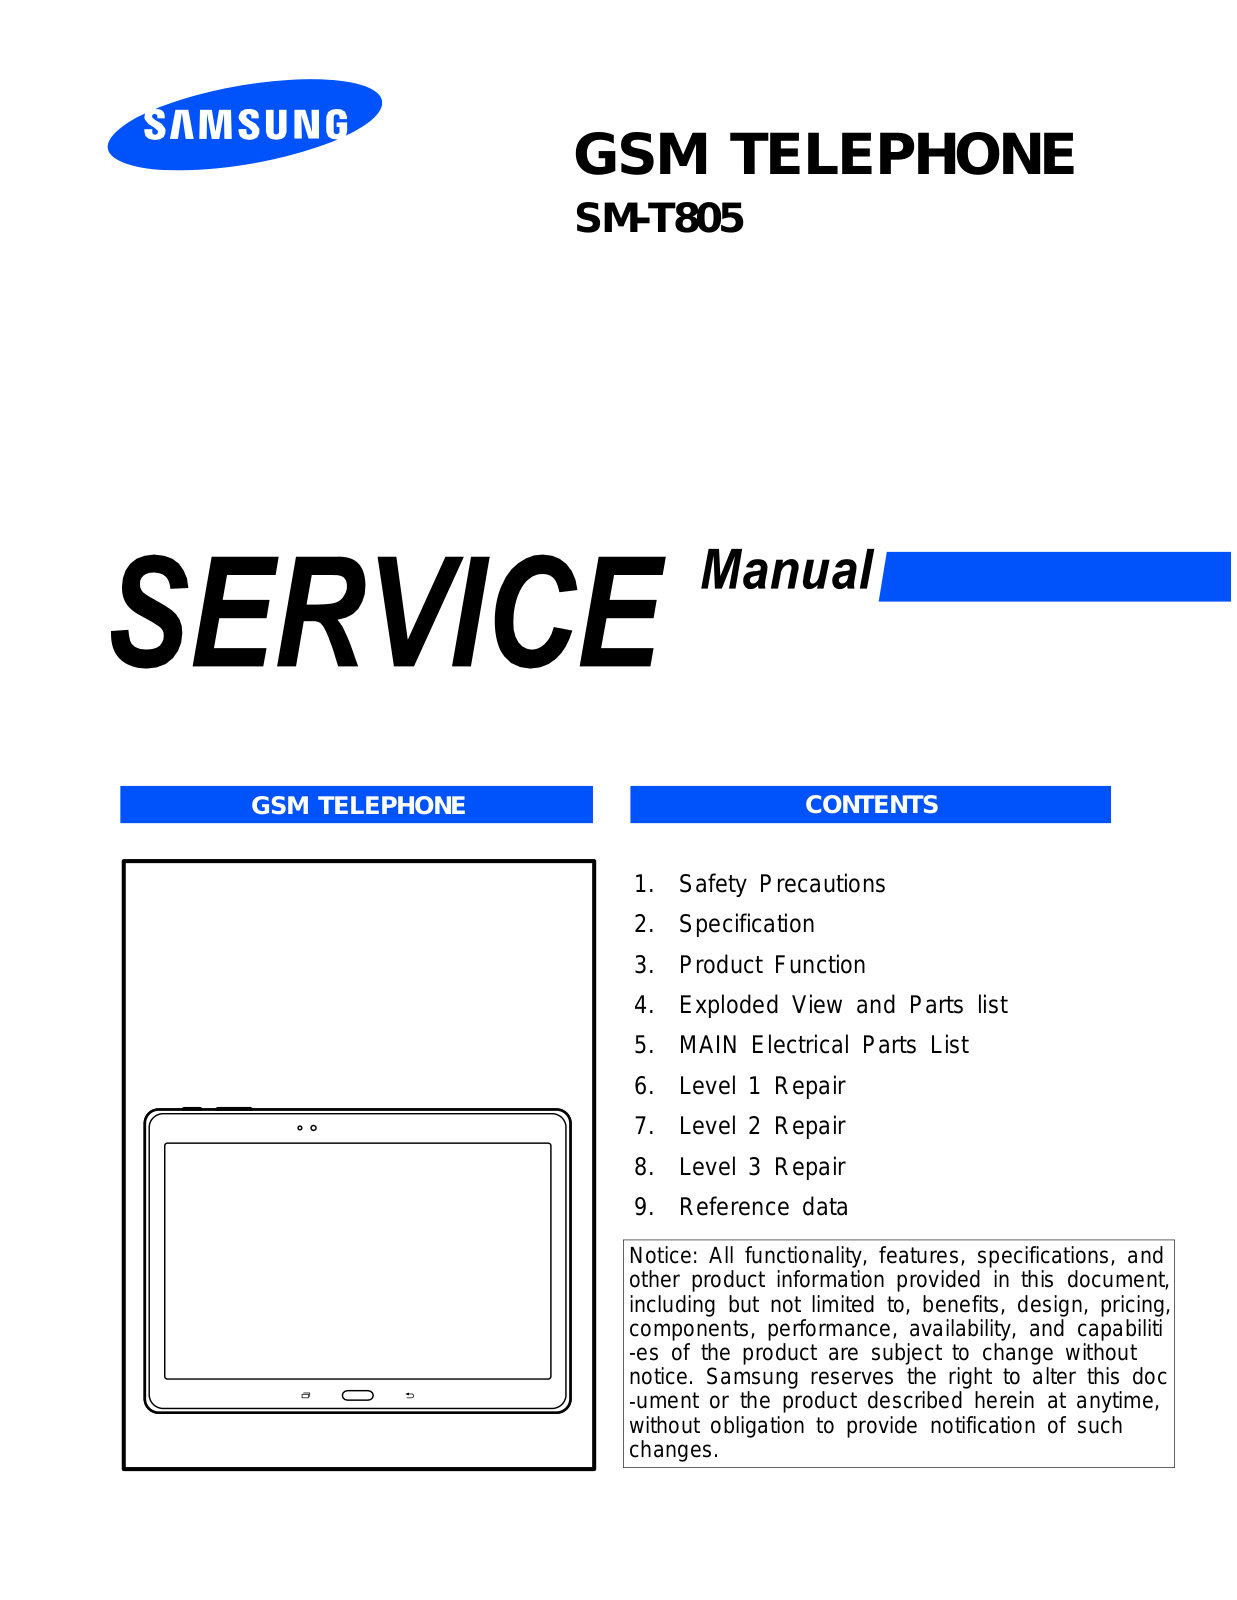 Samsung t805 Service Manual